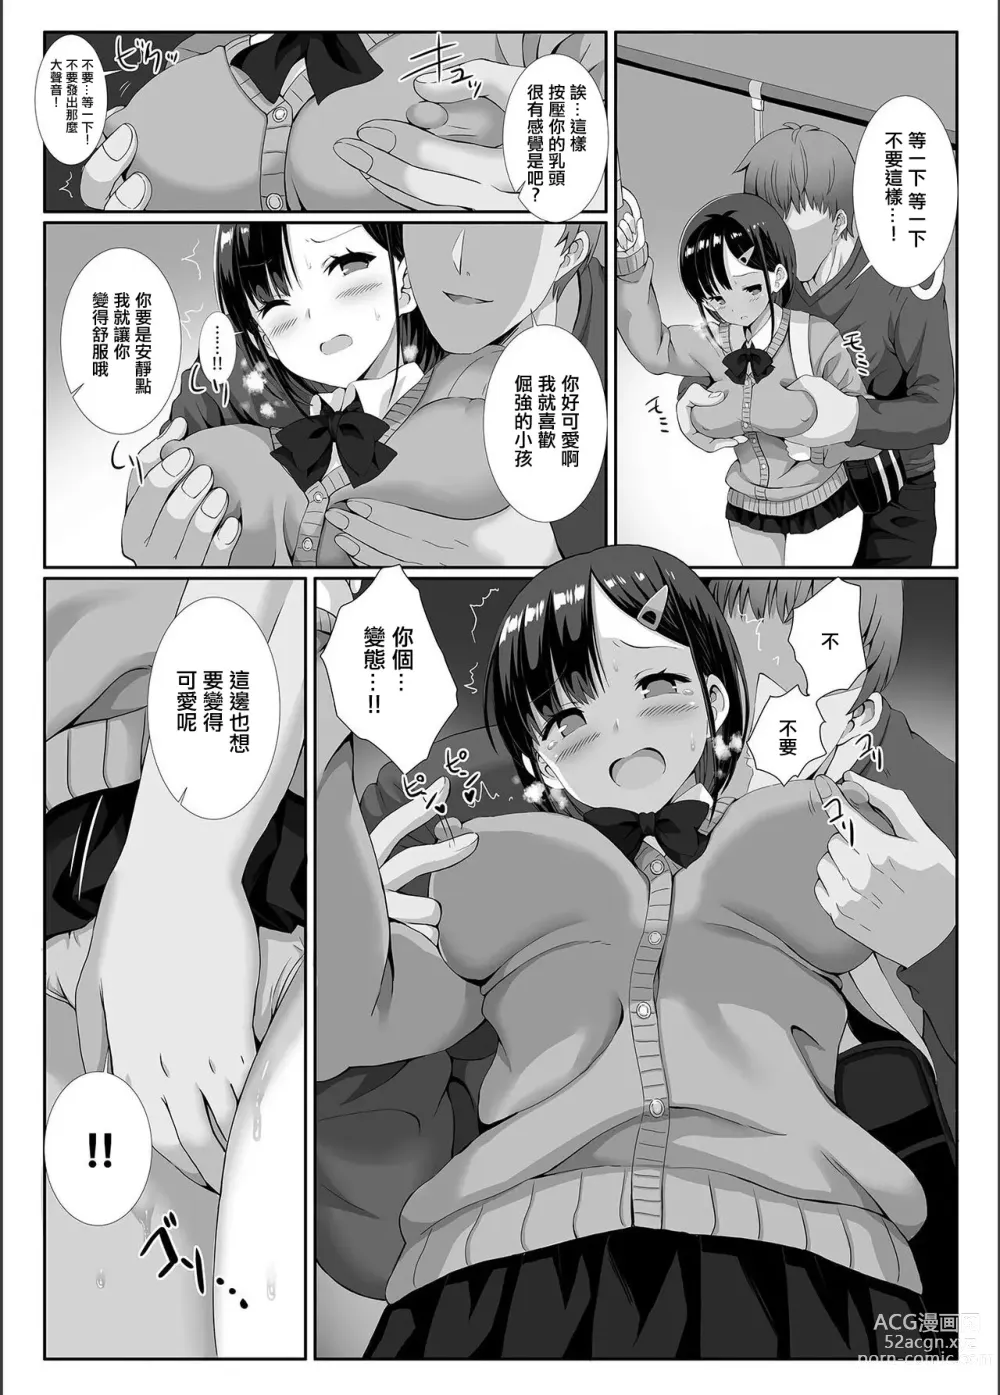 Page 3 of manga Chikan Gekitai Daishippai!!